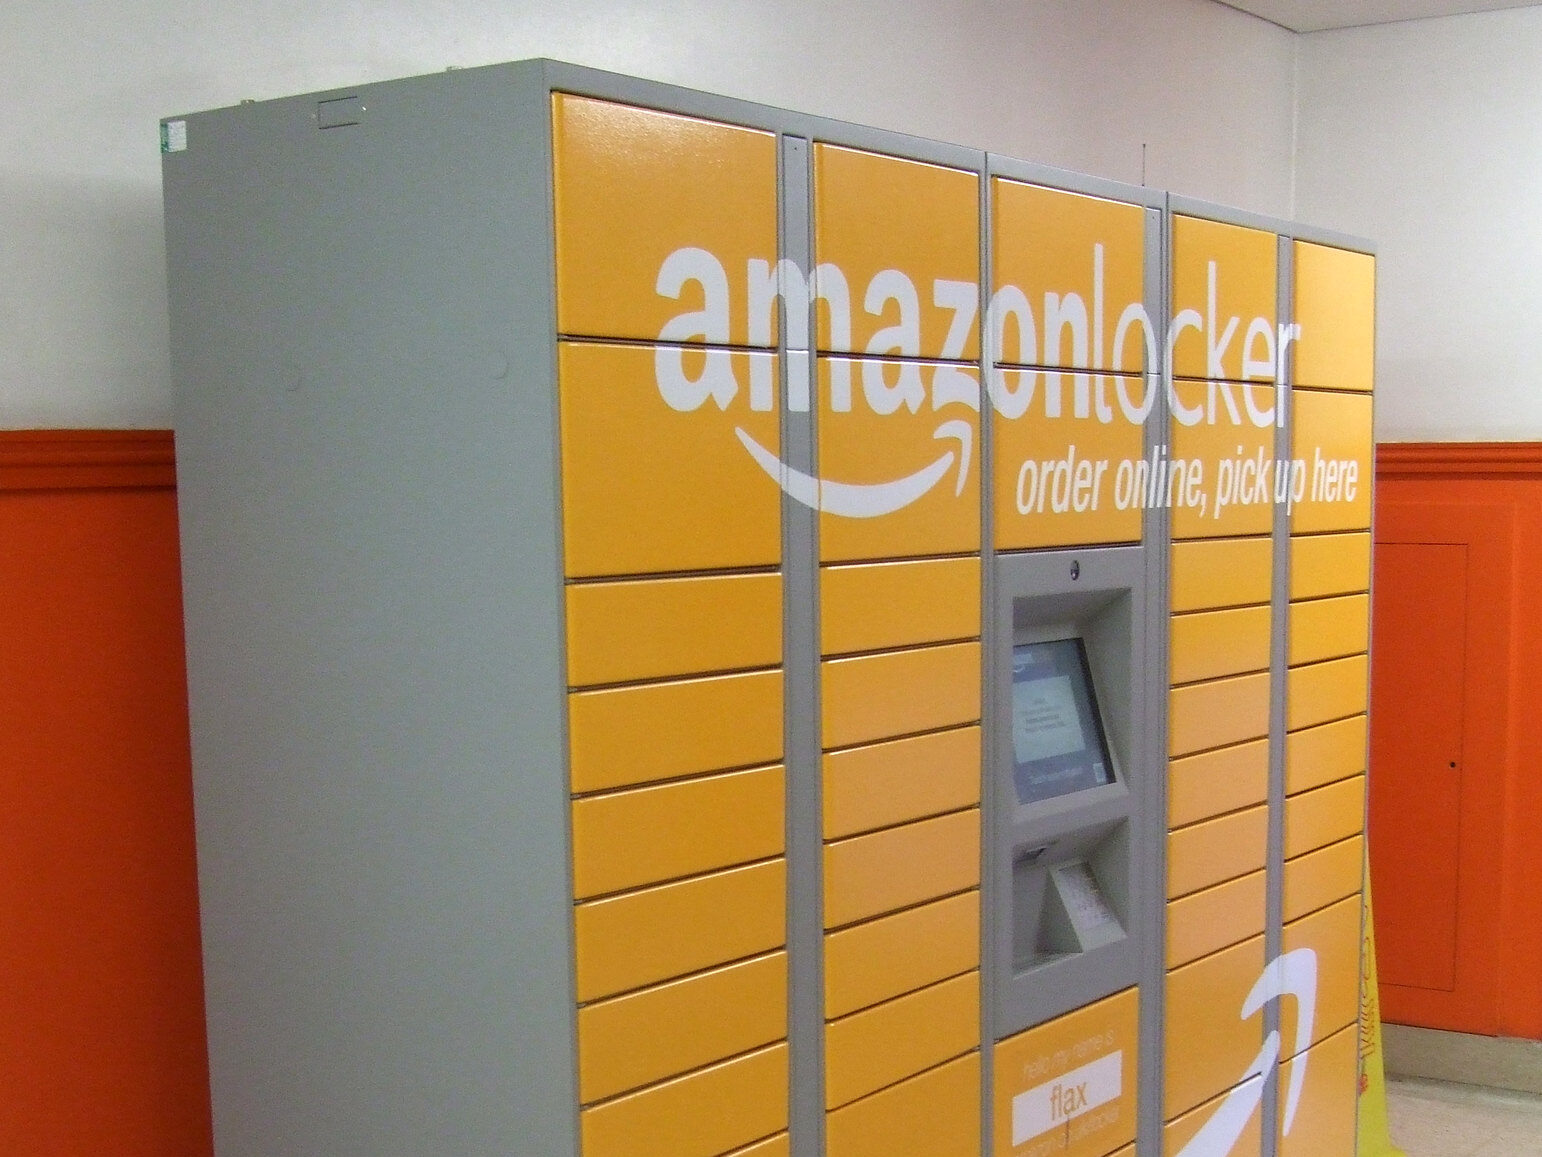 Image of Amazon Locker